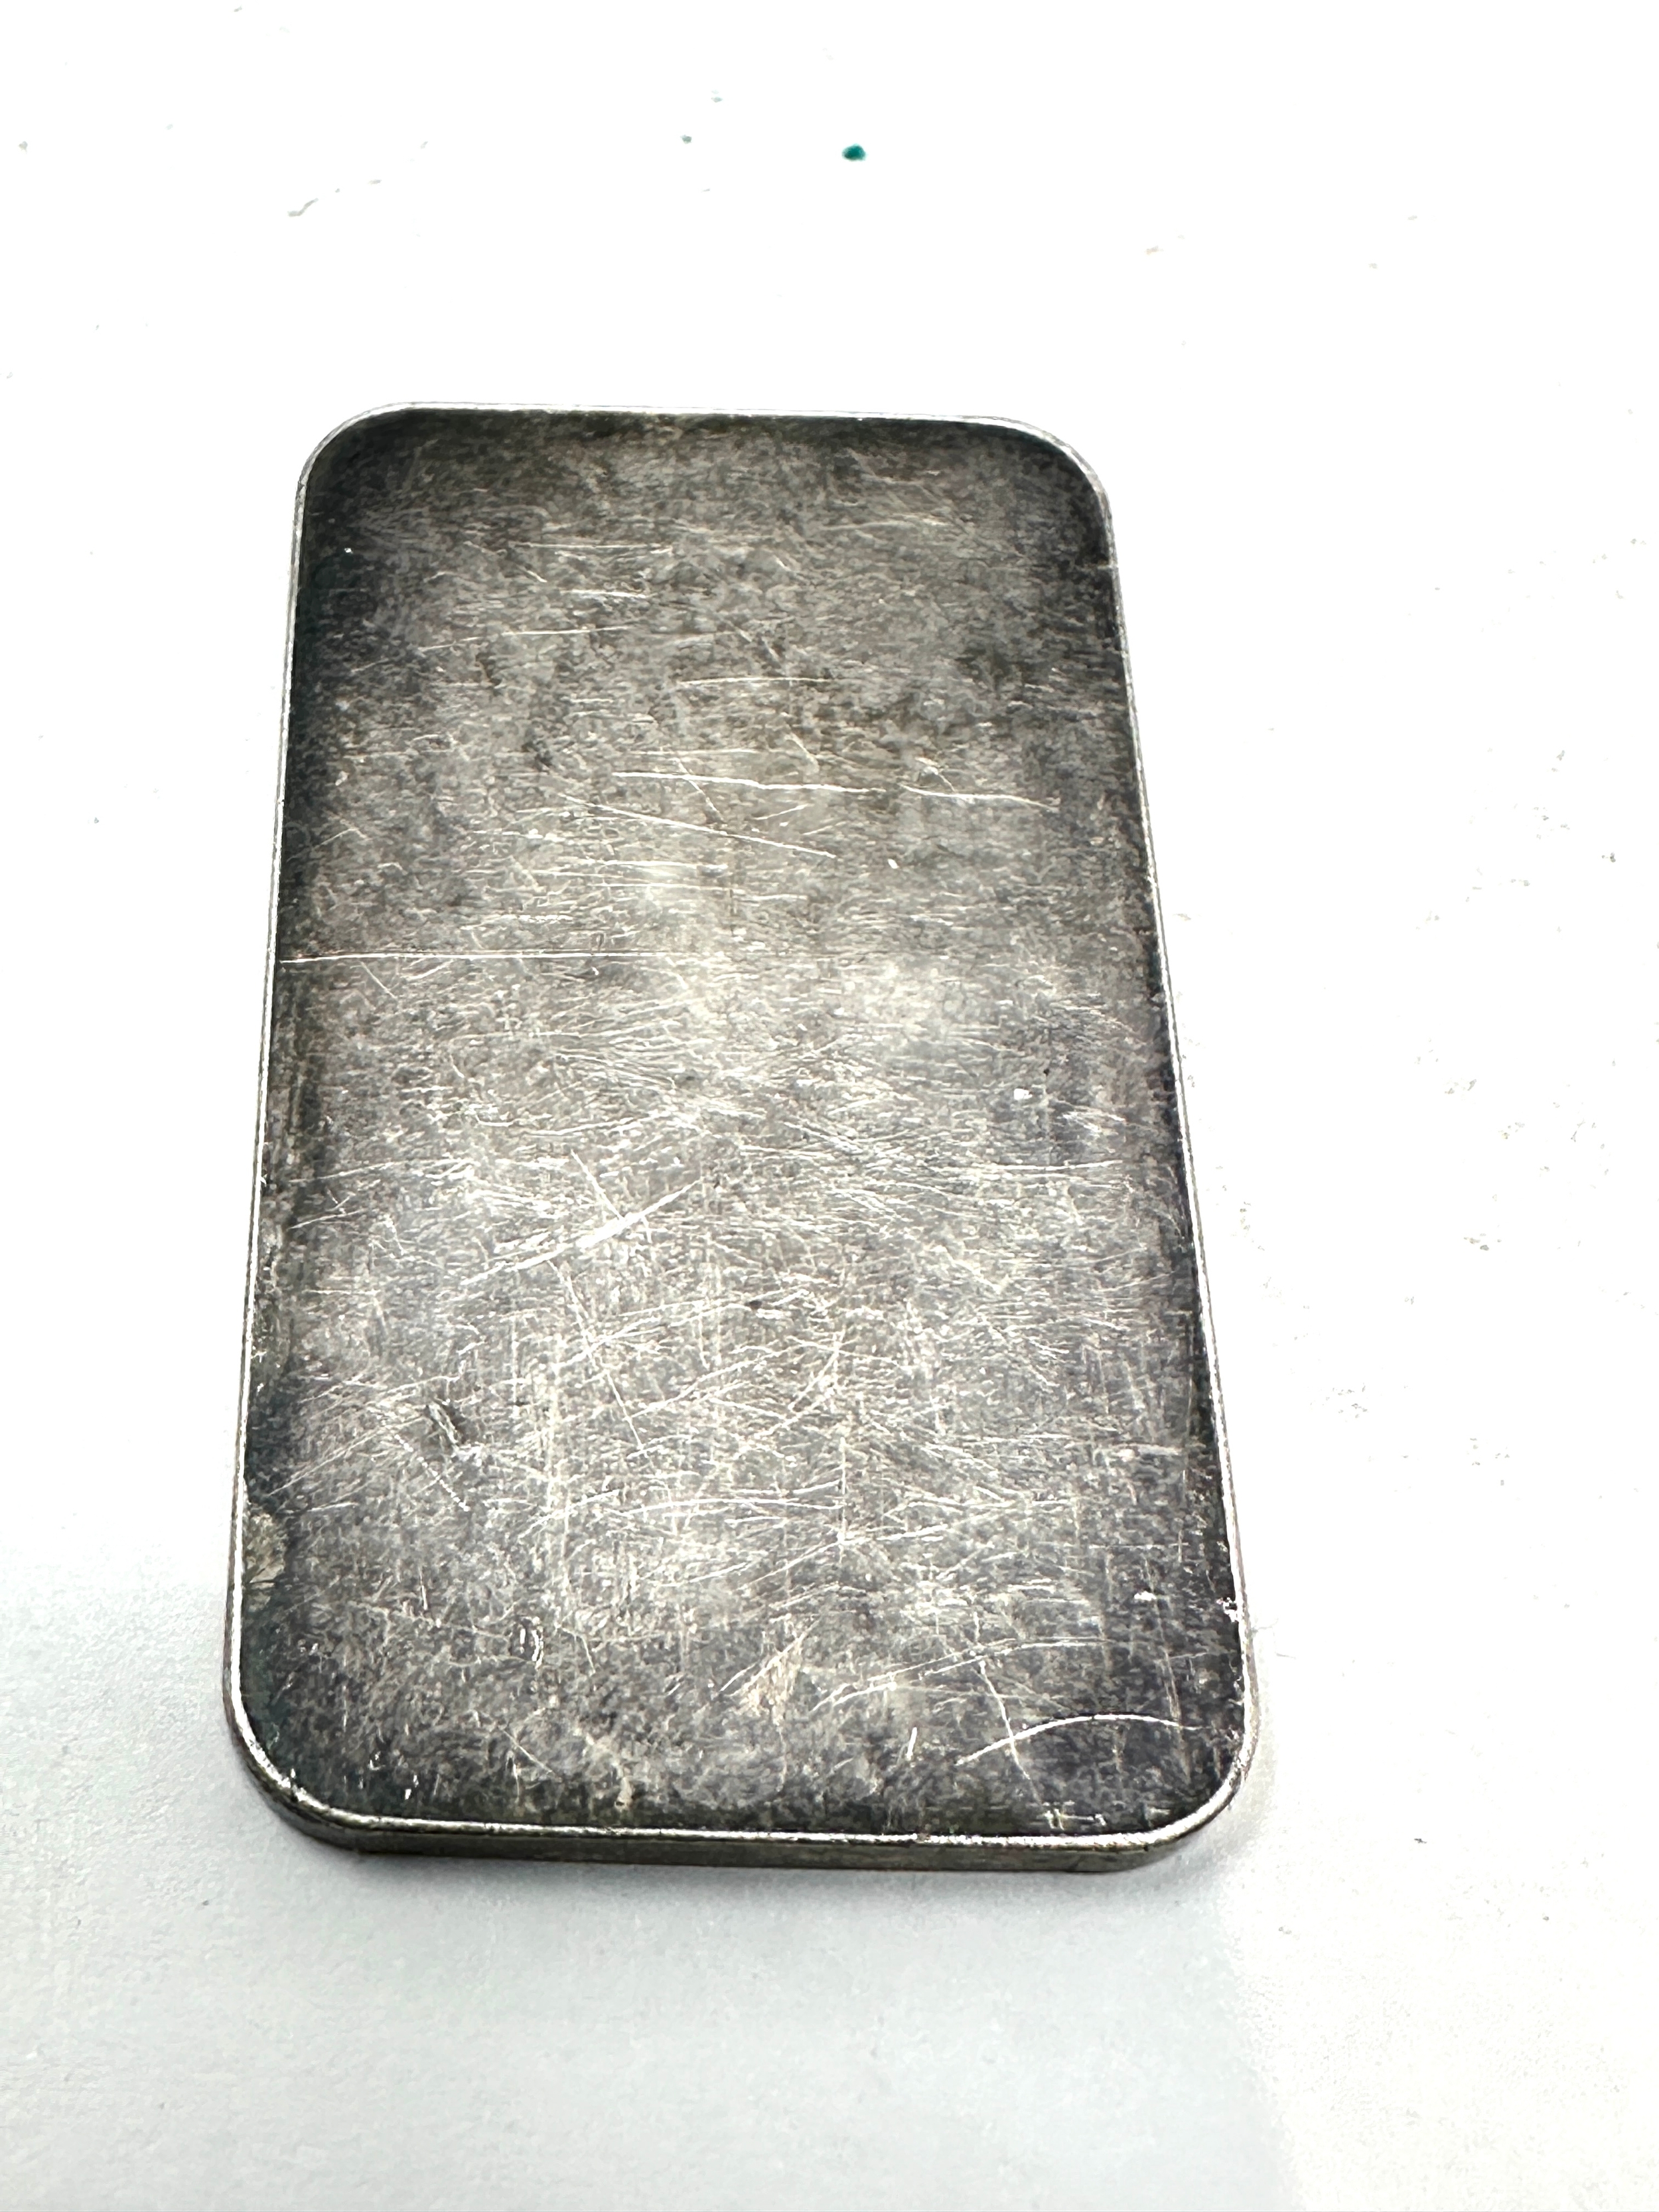 sharps pixley & Co one ounce fine 999.0 silver ingot bar - Image 2 of 2